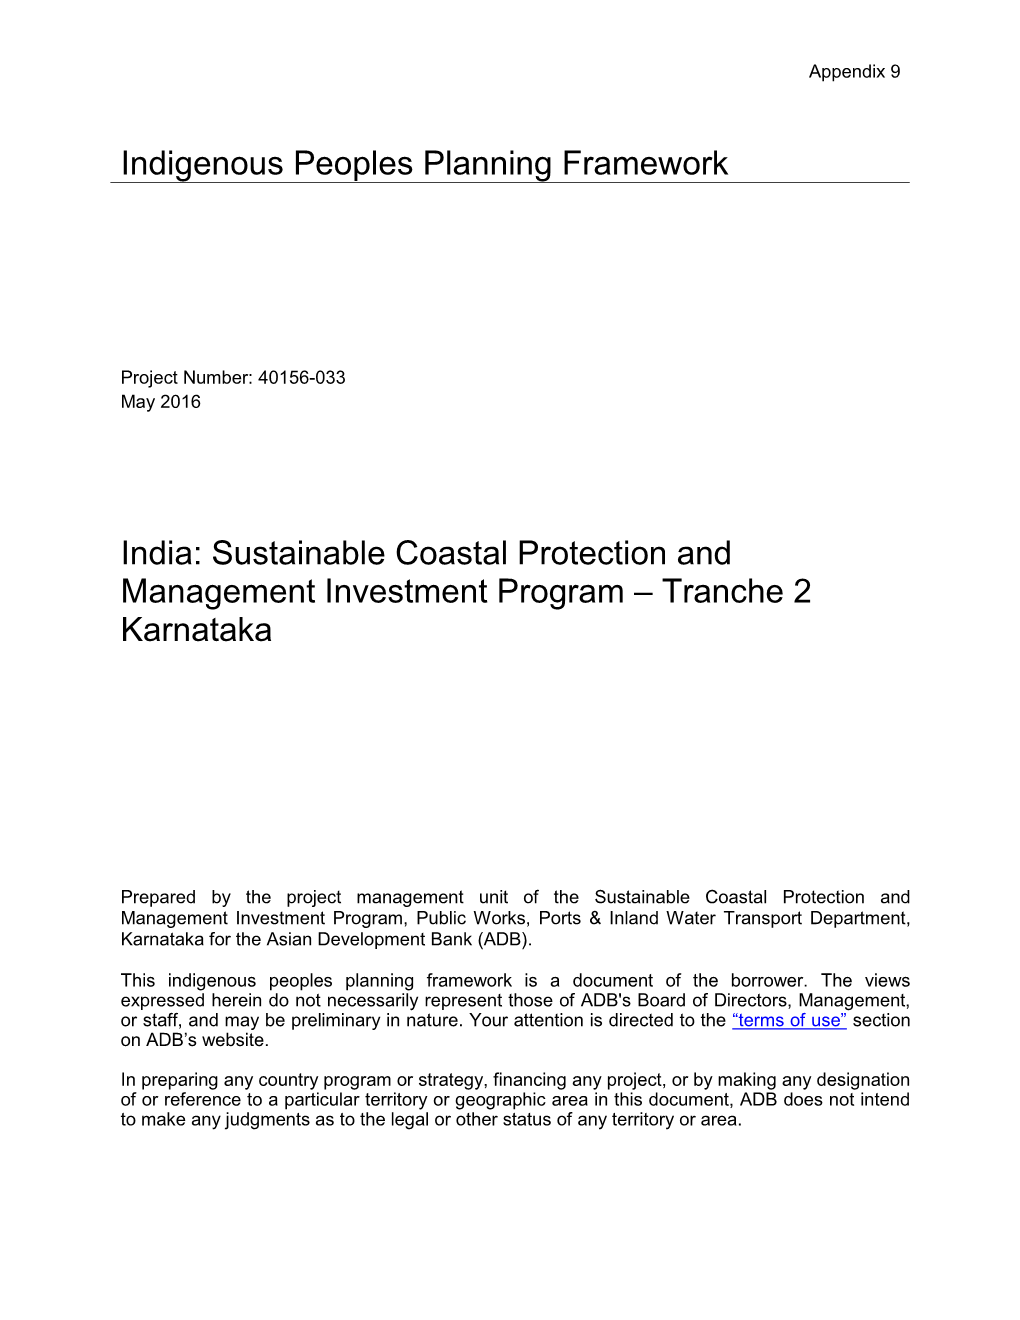 Indigenous Peoples Planning Framework India: Sustainable